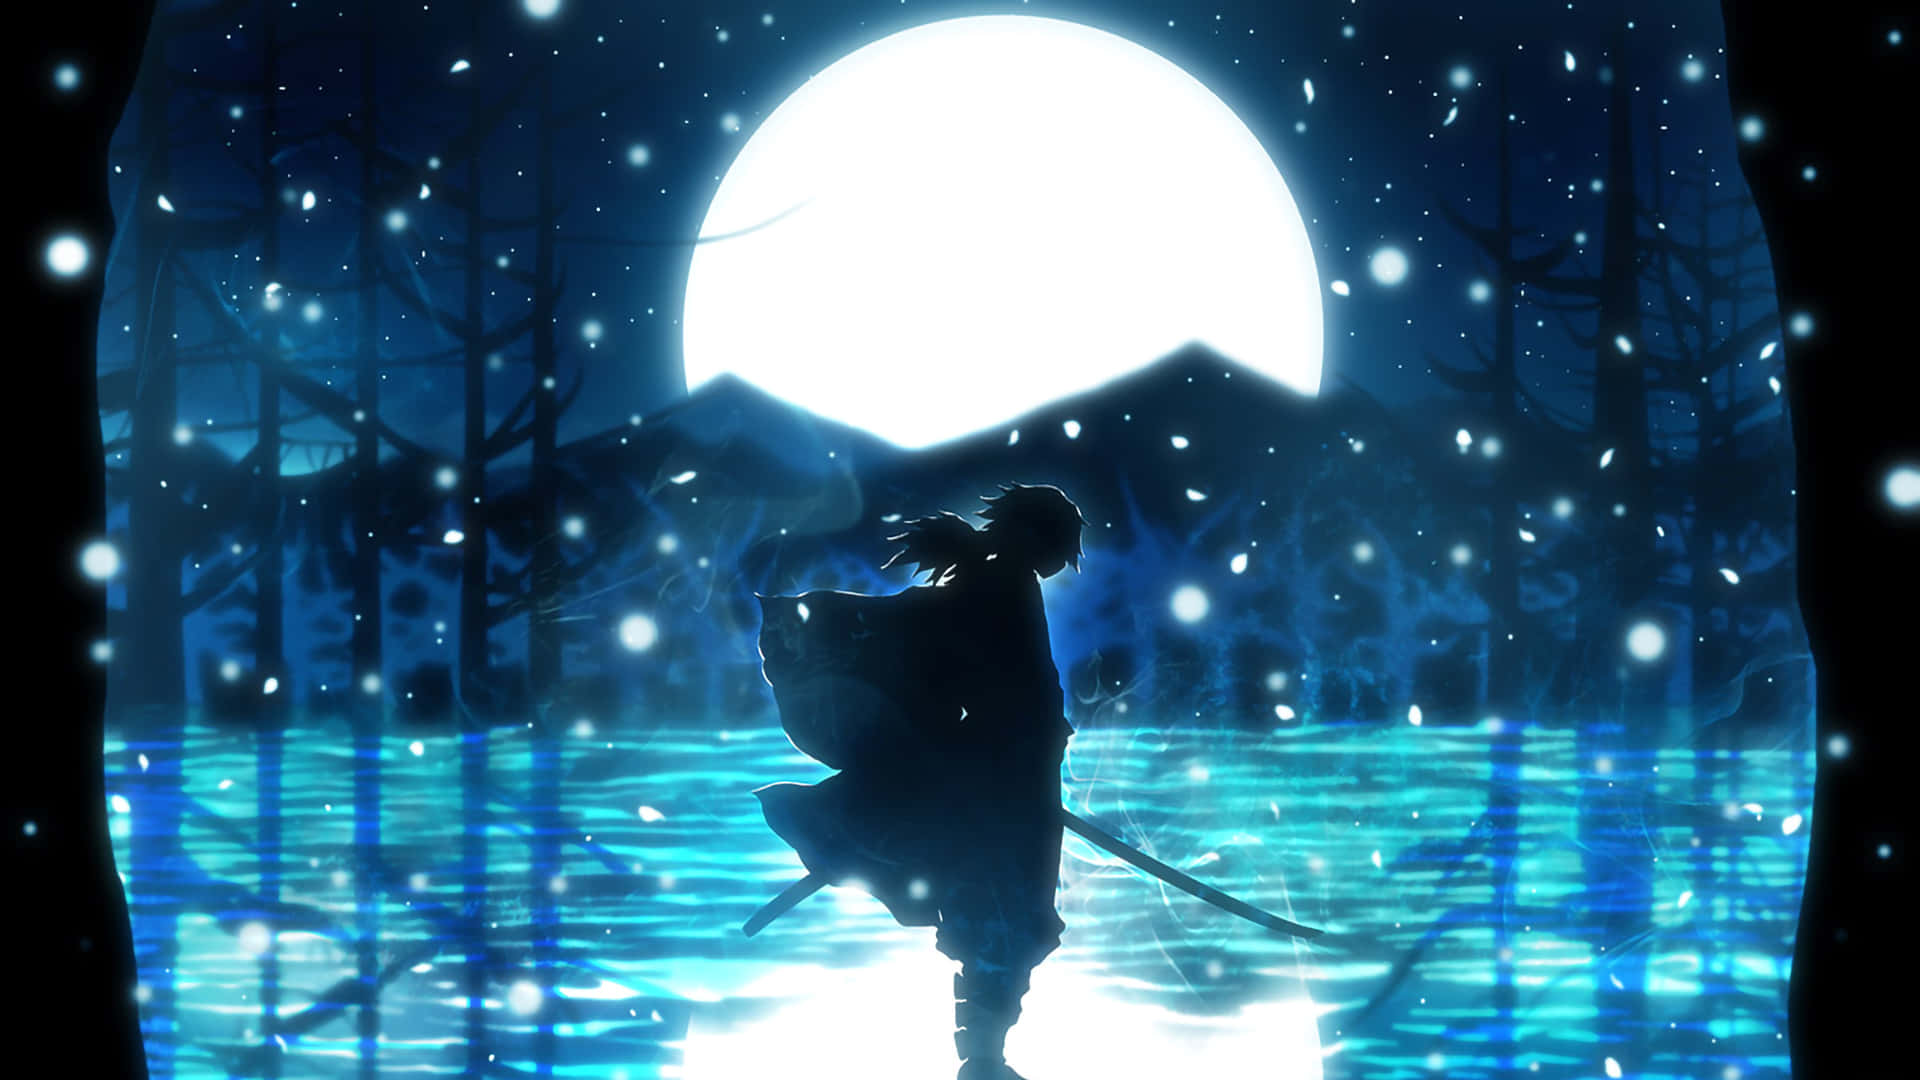 Giyu Tomioka Night Anime Scenery Wallpaper